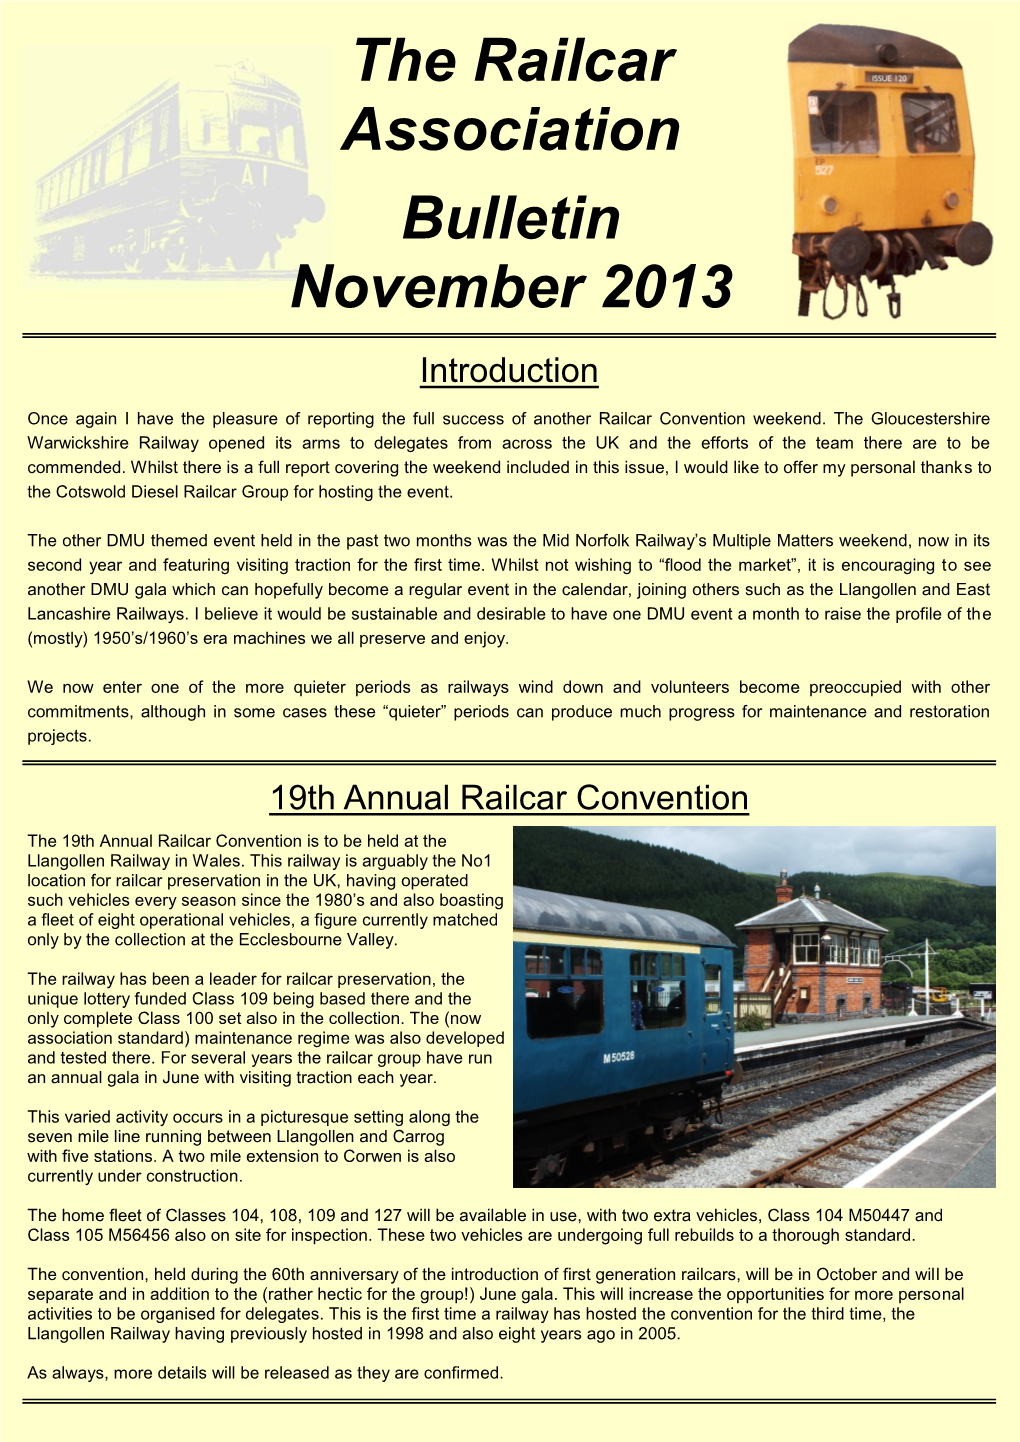 The Railcar Association Bulletin November 2013